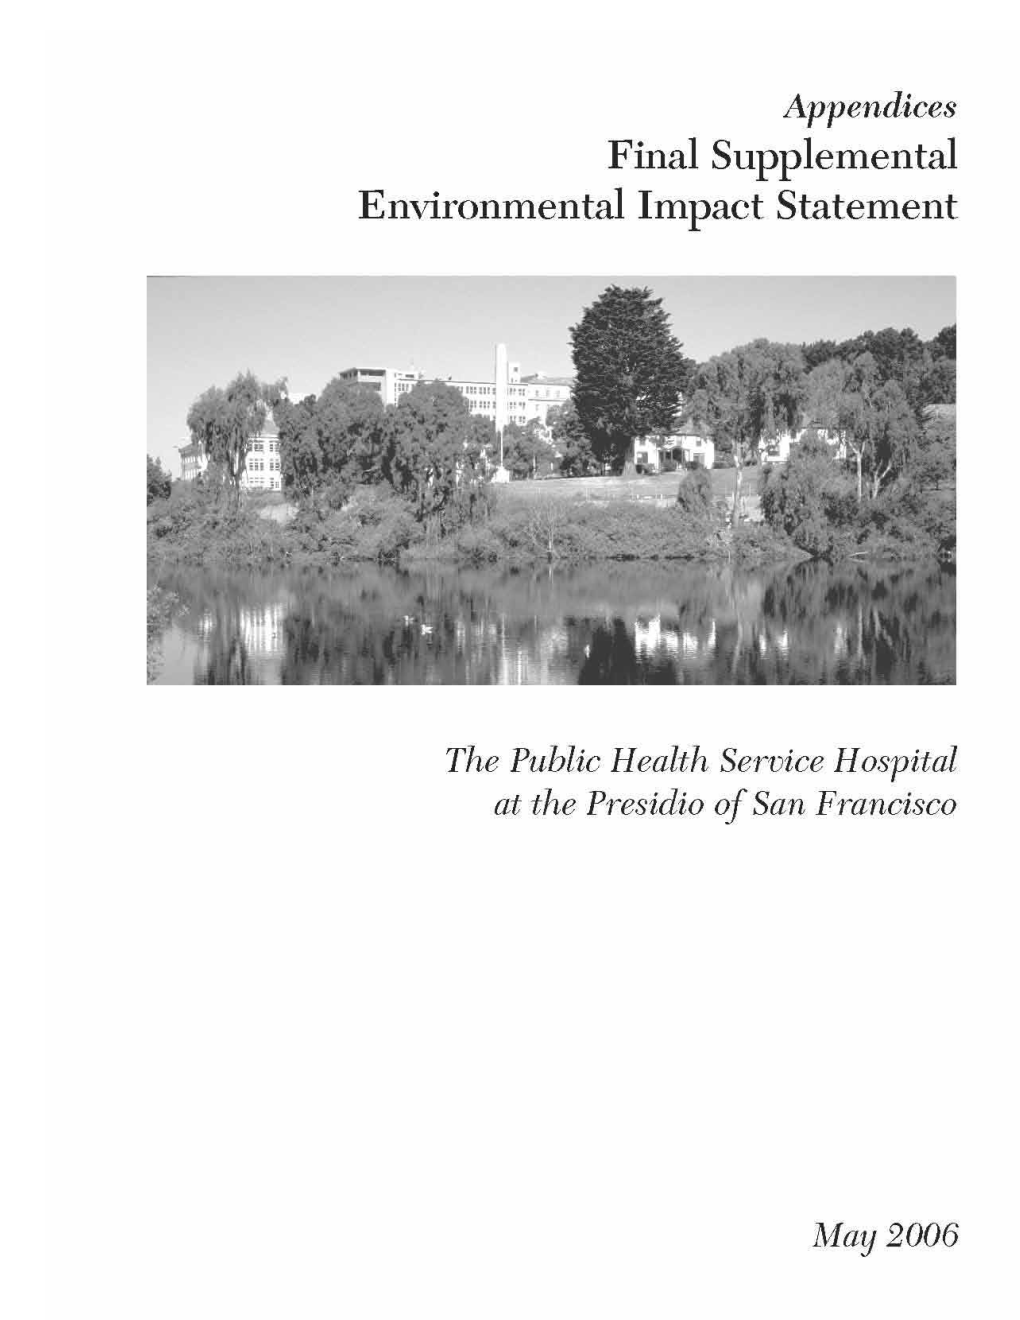 Public Health Service Hospital Final Supplemental